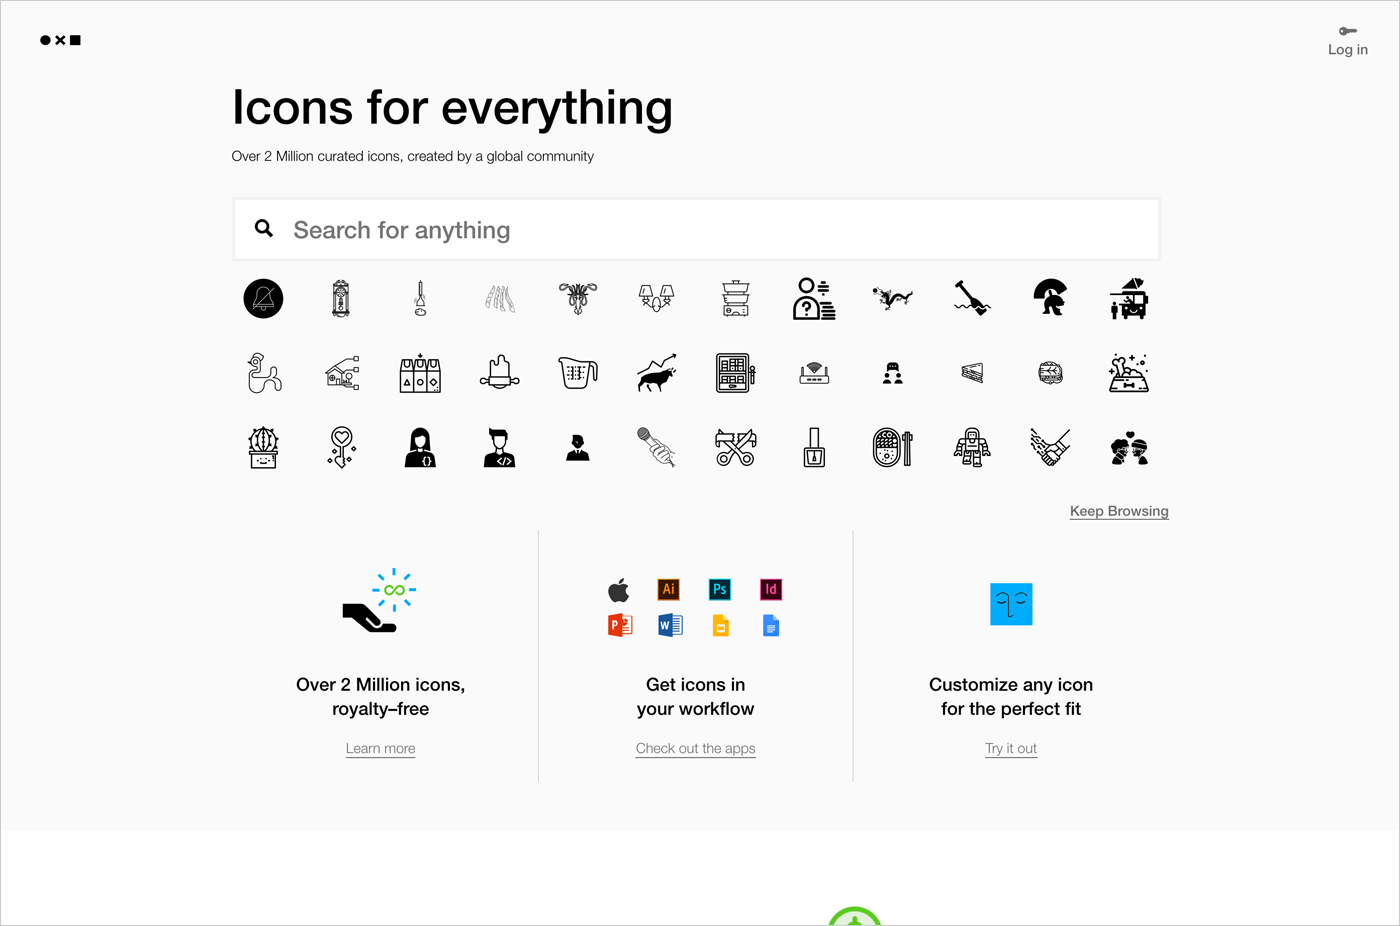 Icons for everythingウェブサイトの画面キャプチャ画像